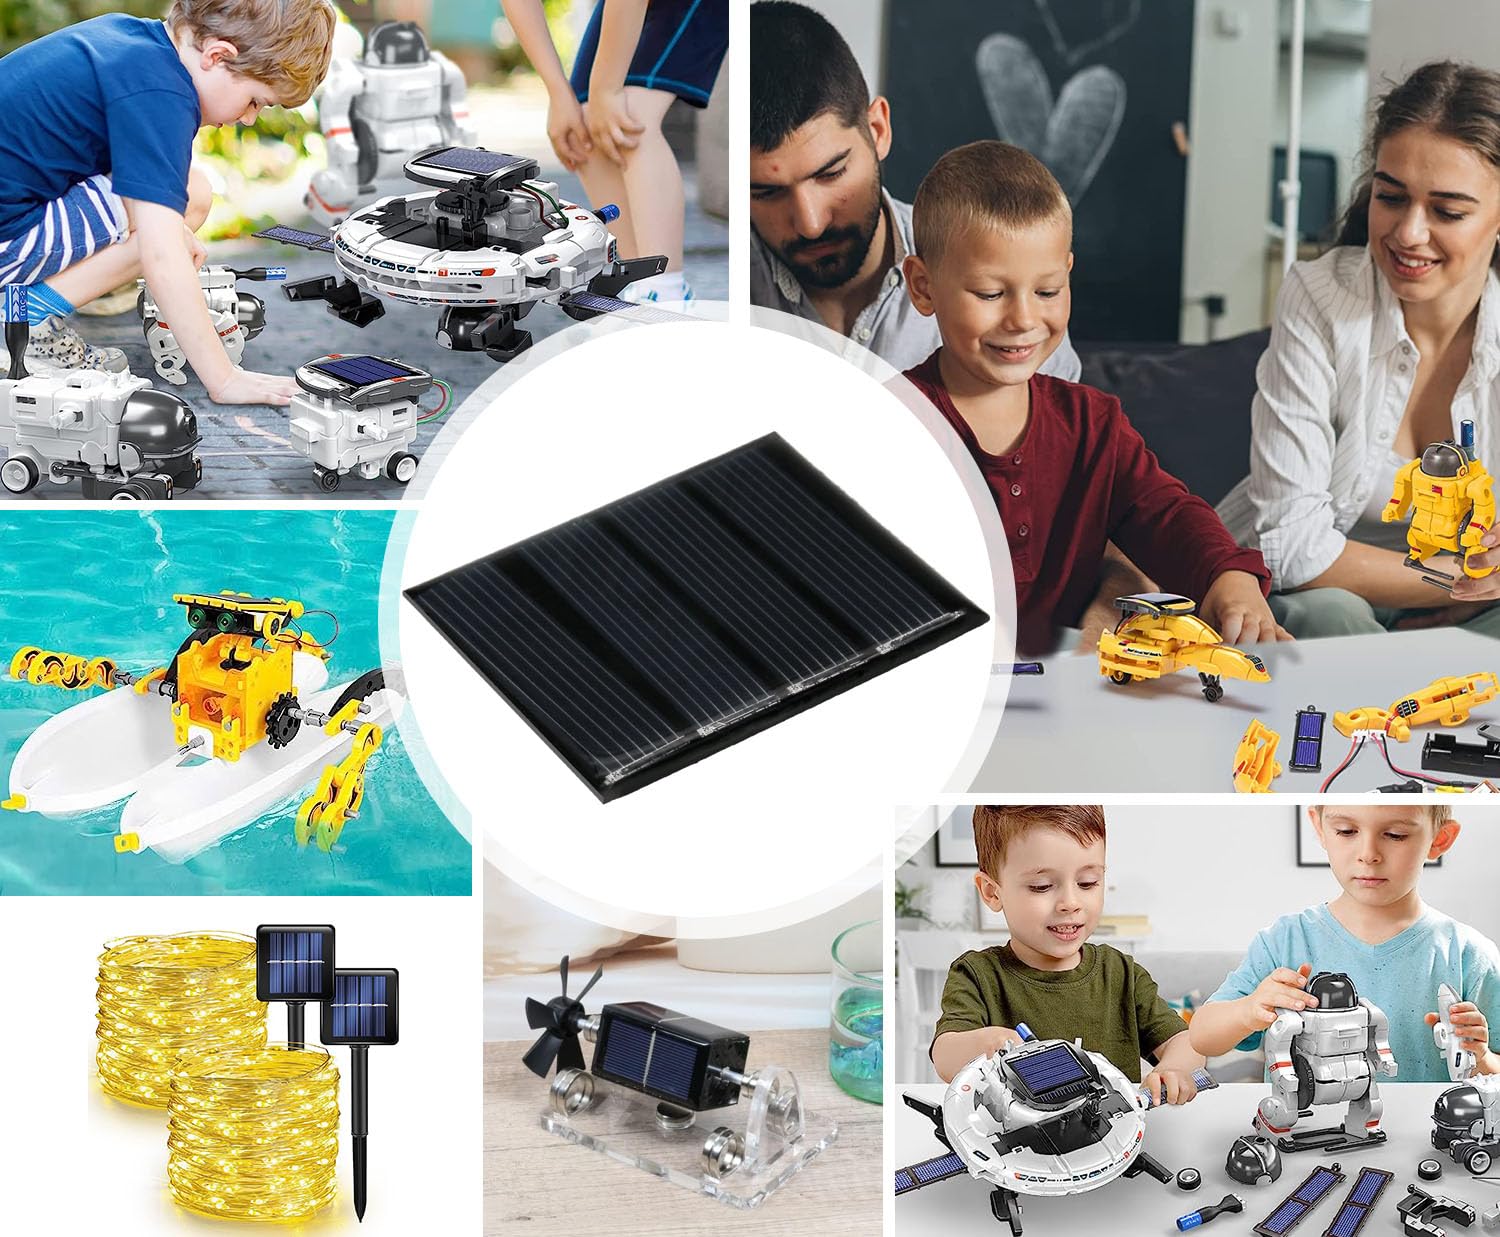 10Pcs Mini Solar Panels for Solar Power, 12V 70mA Mini Solar Panel Kit DIY Electric Toy Photovoltaic Cells Solar Epoxy Cell Charger 4.33"*2.17"(110mm*55mm)